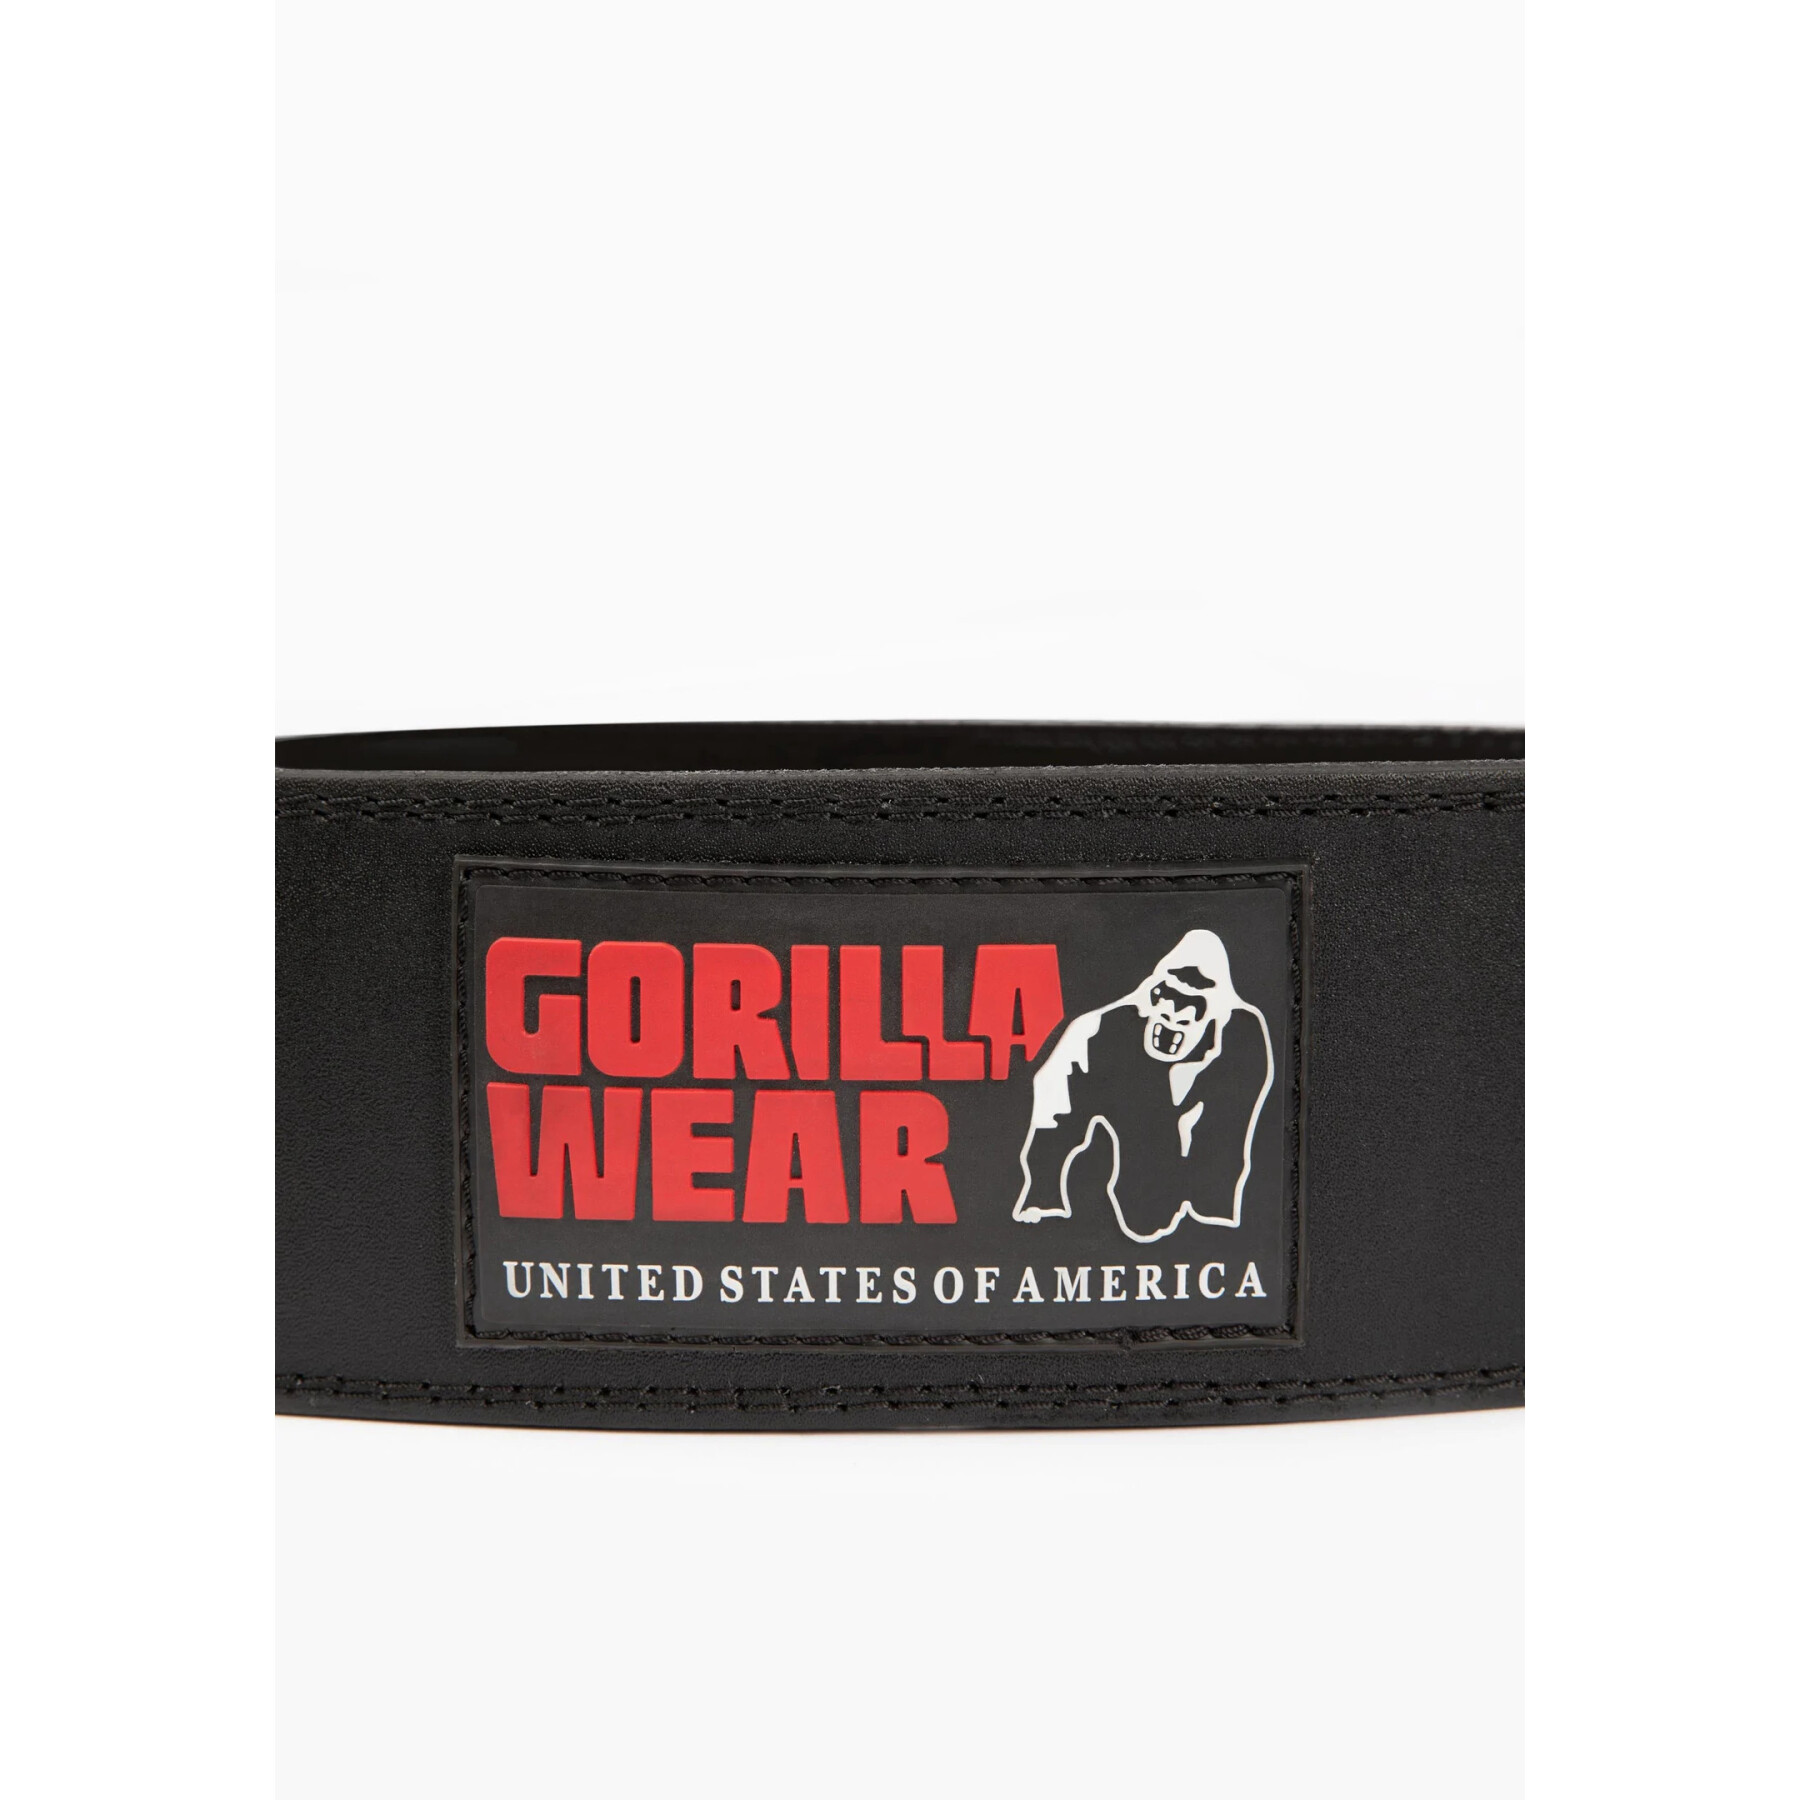 Padded leather lifting belt Gorilla Wear 4"